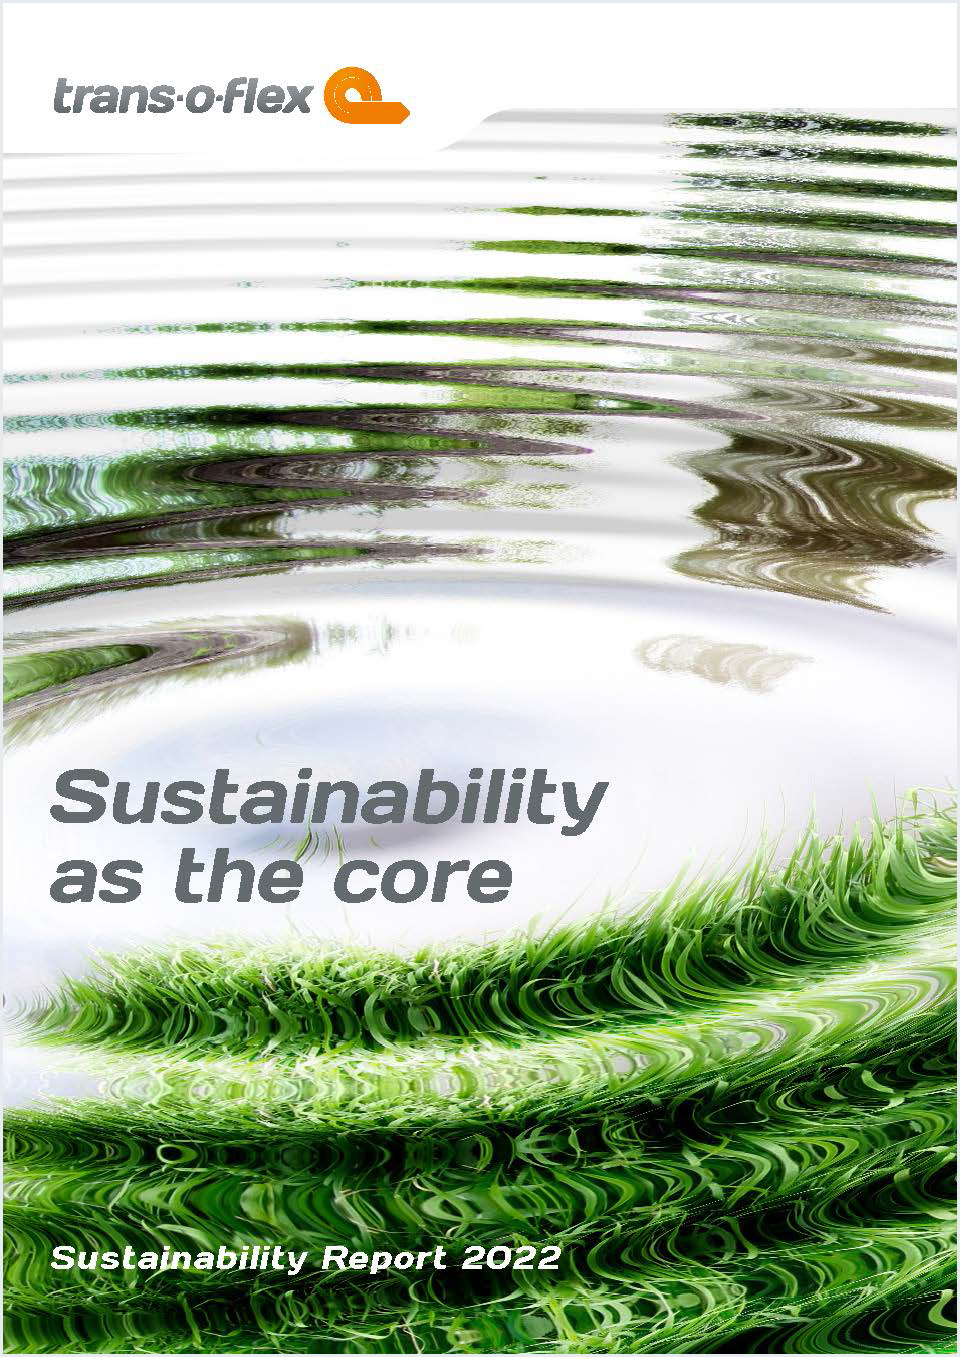 trans-o-flex sustainability report